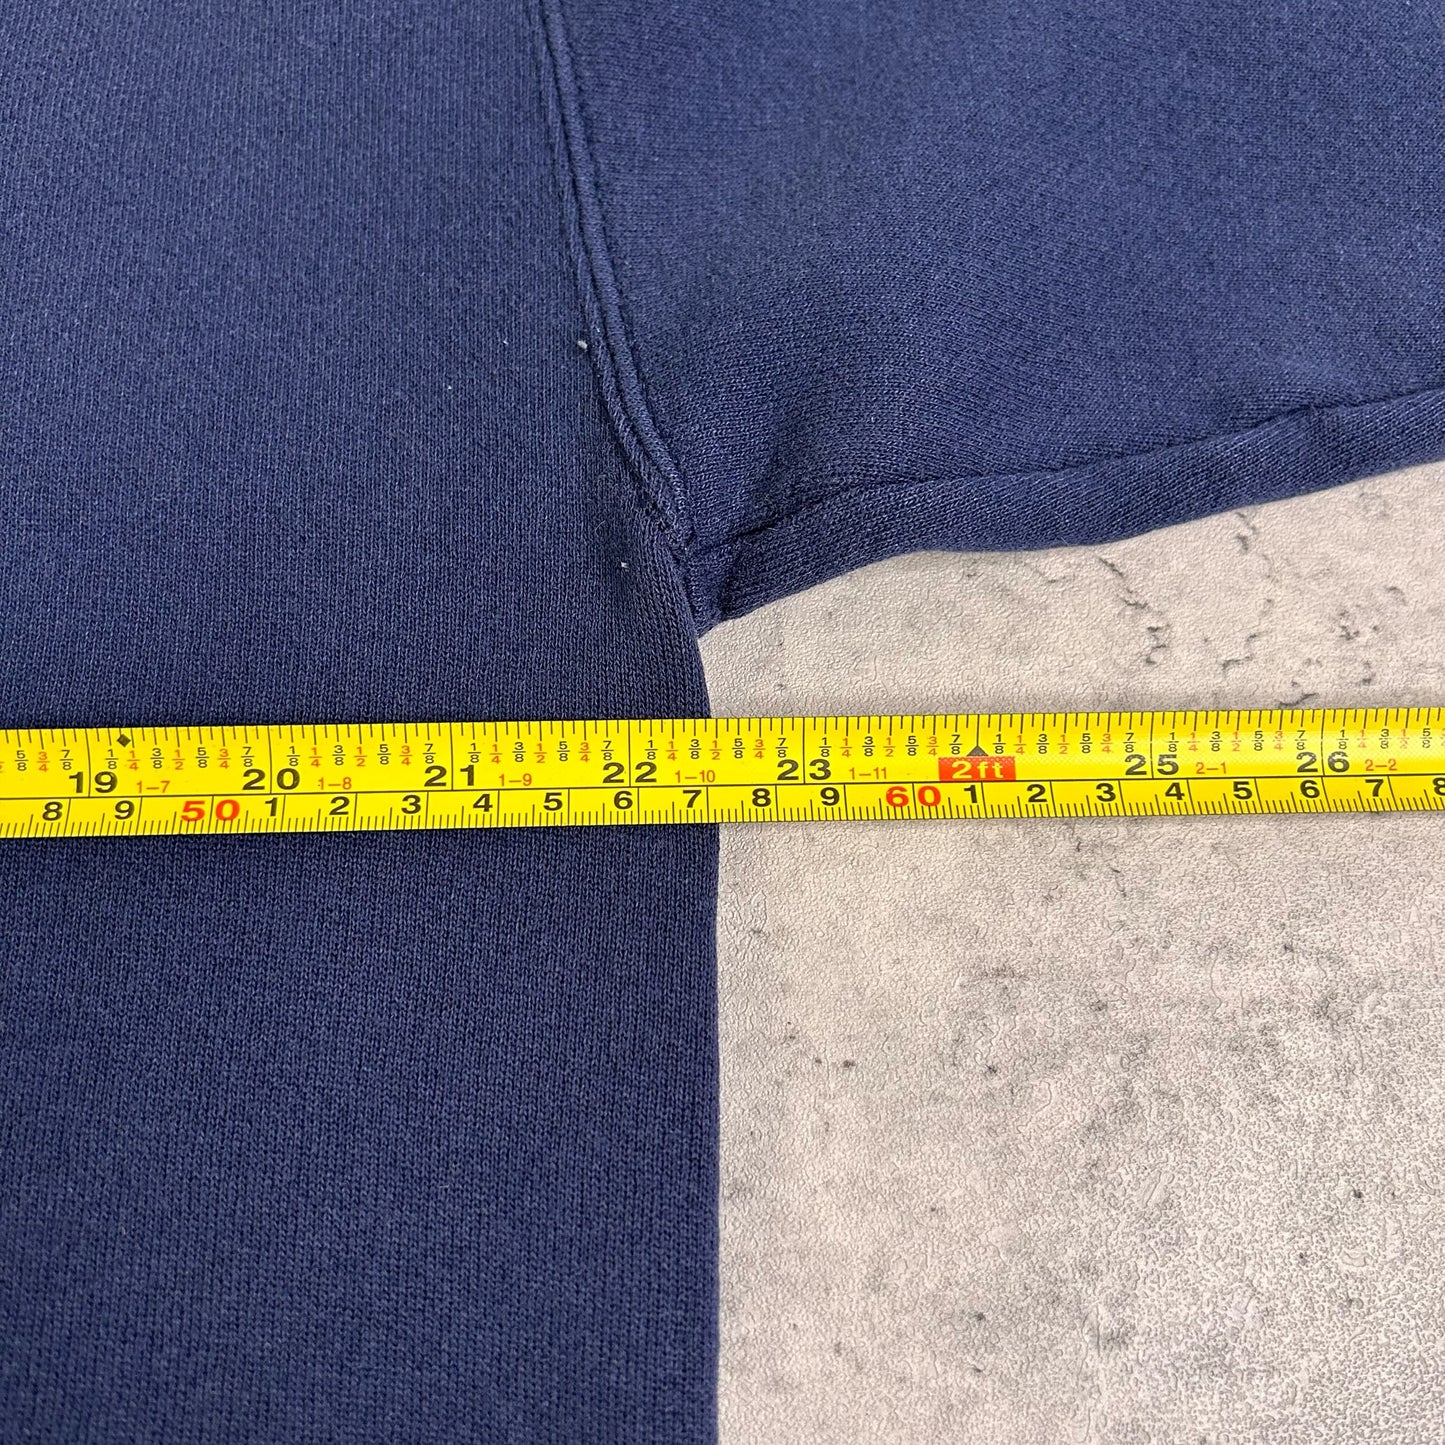 90's Georgetown Hoyas Sweatshirt size L